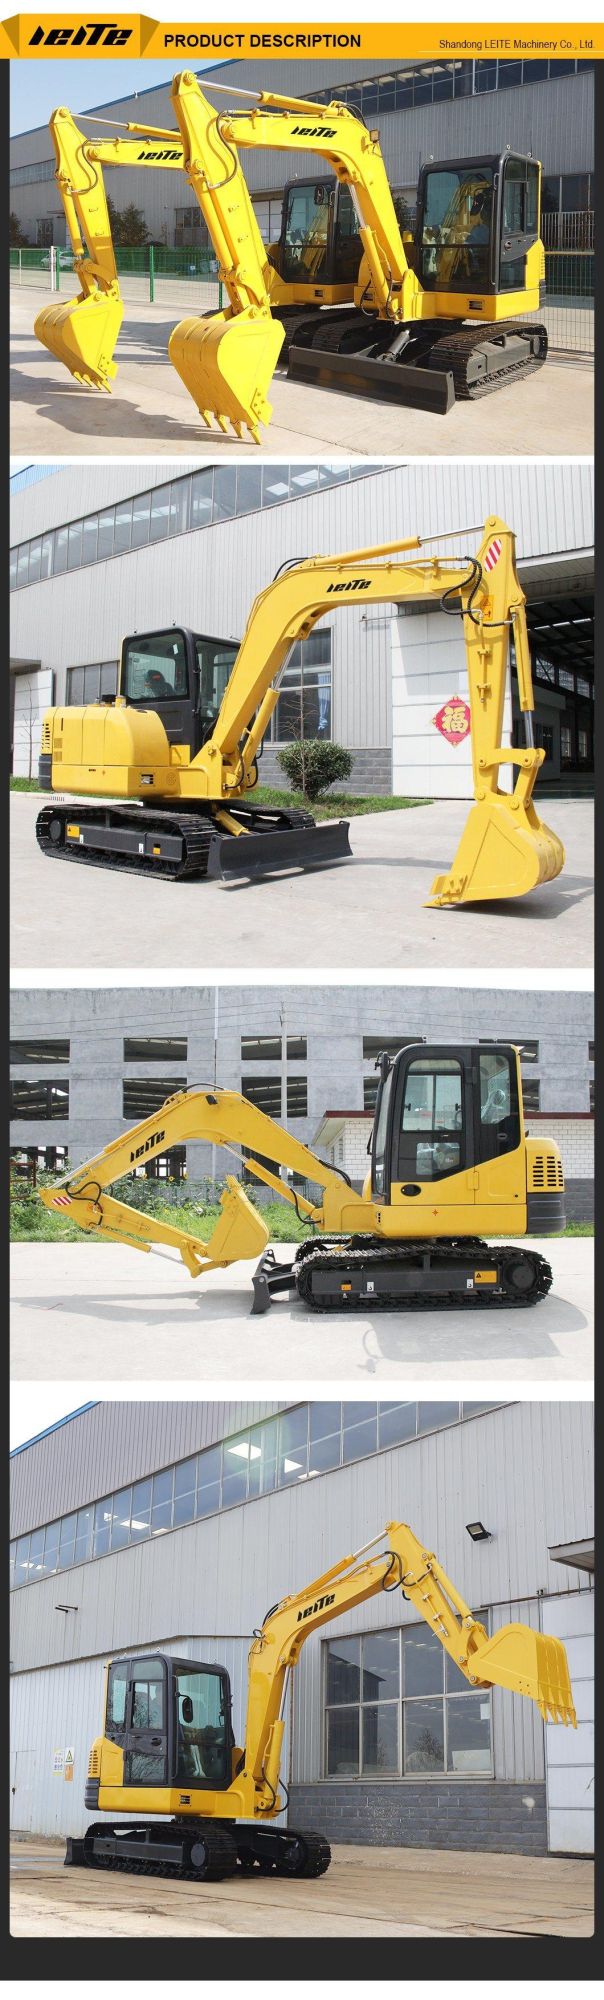 6 Ton Crawler Excavator Long Arm Mini Tractor Excavator with Cheapest Price